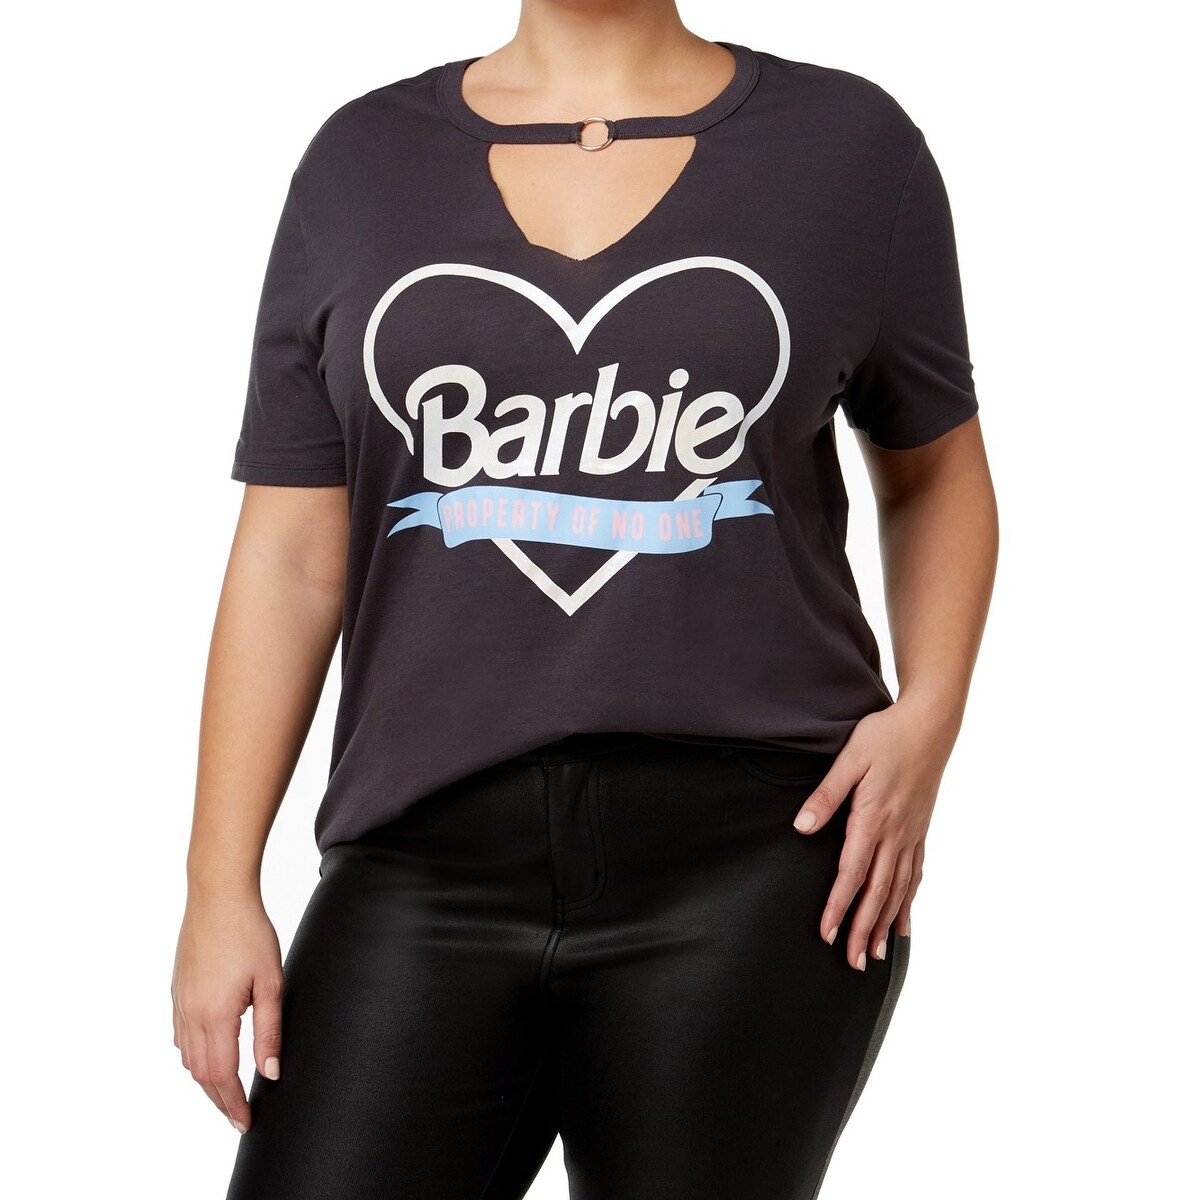 Barbie Silhouette Tee - Torrid Trendy Plus Size Barbie T-Shirt Plus Size Ba...